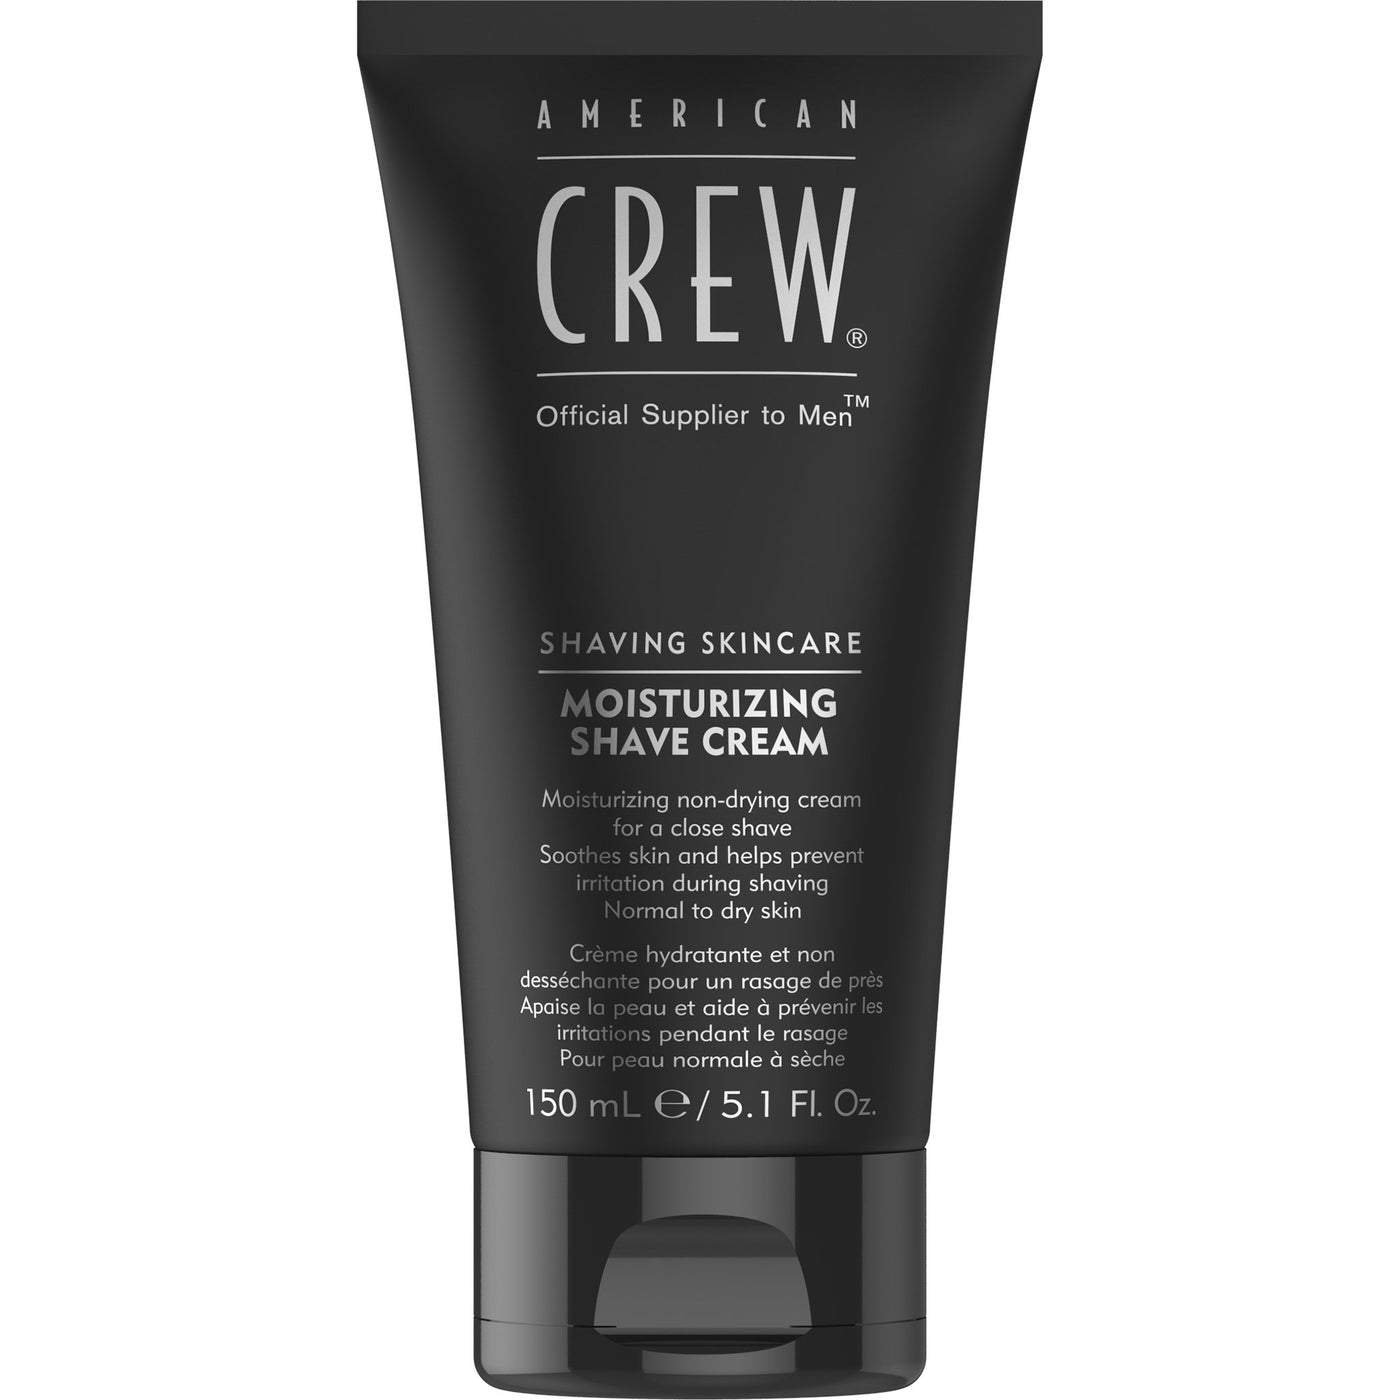 American Crew Shaving Skincare Moisturizing Shave Cream (150ml)